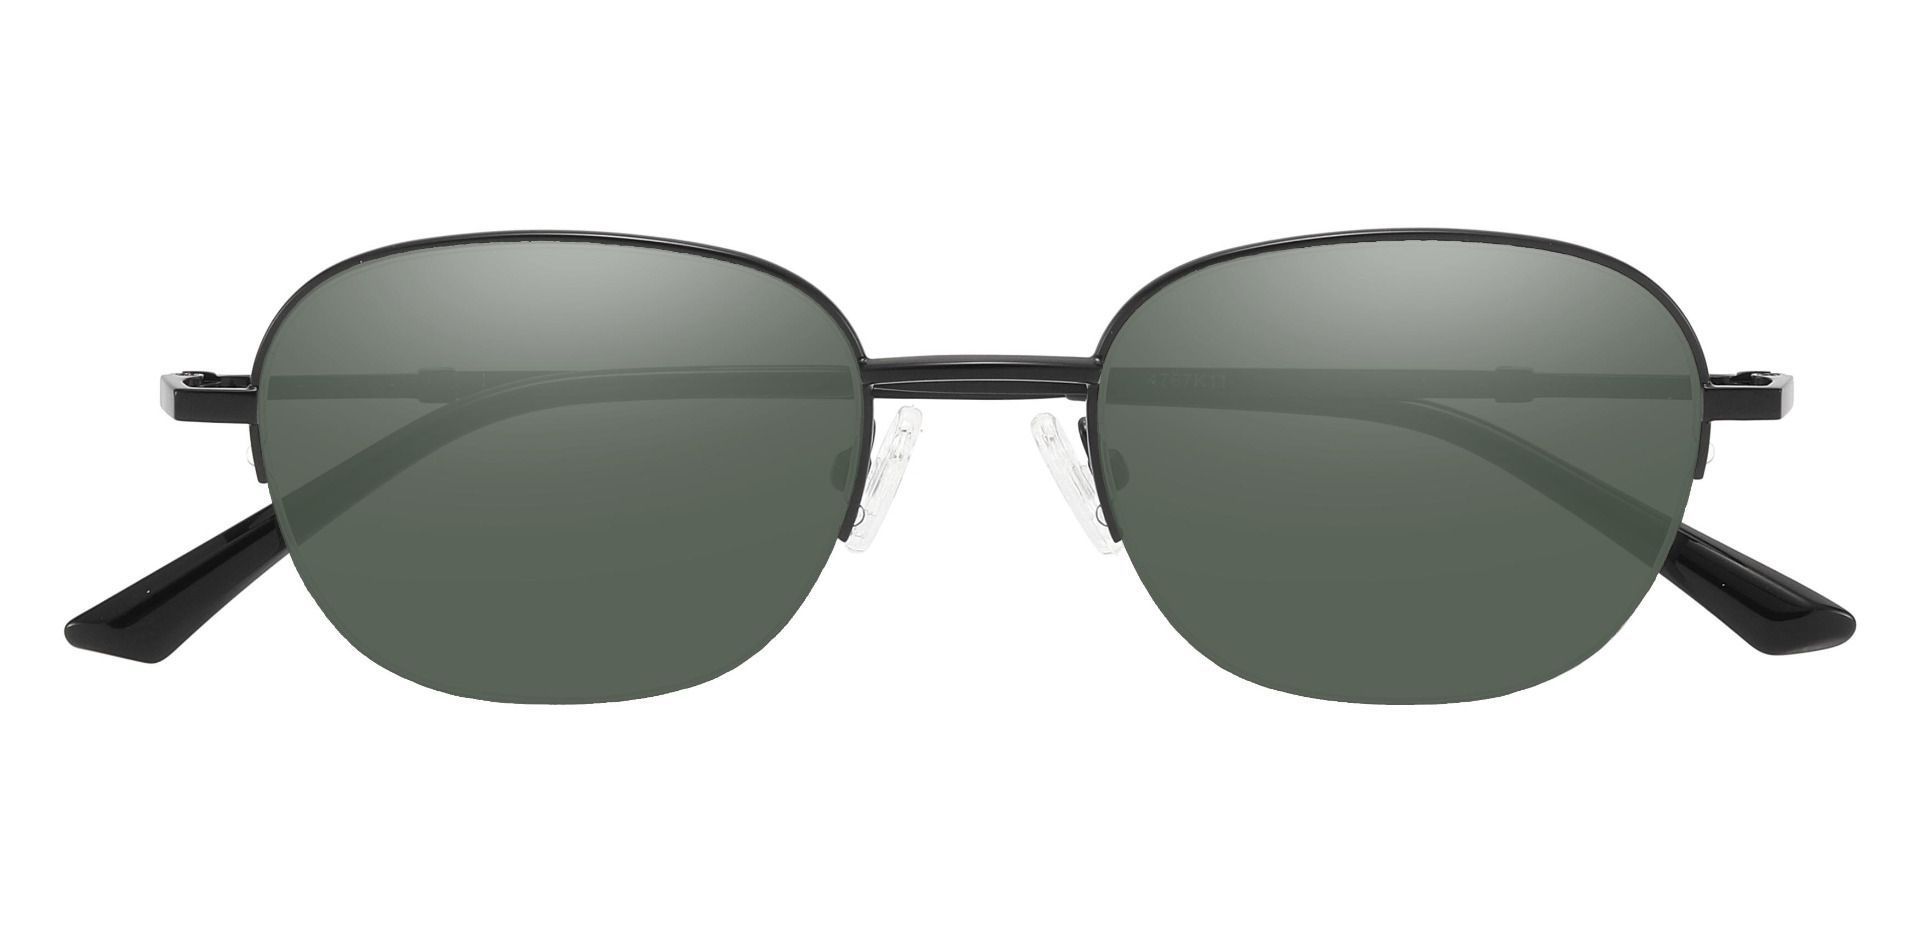 Rochester Oval Prescription Sunglasses - Black Frame With Green Lenses